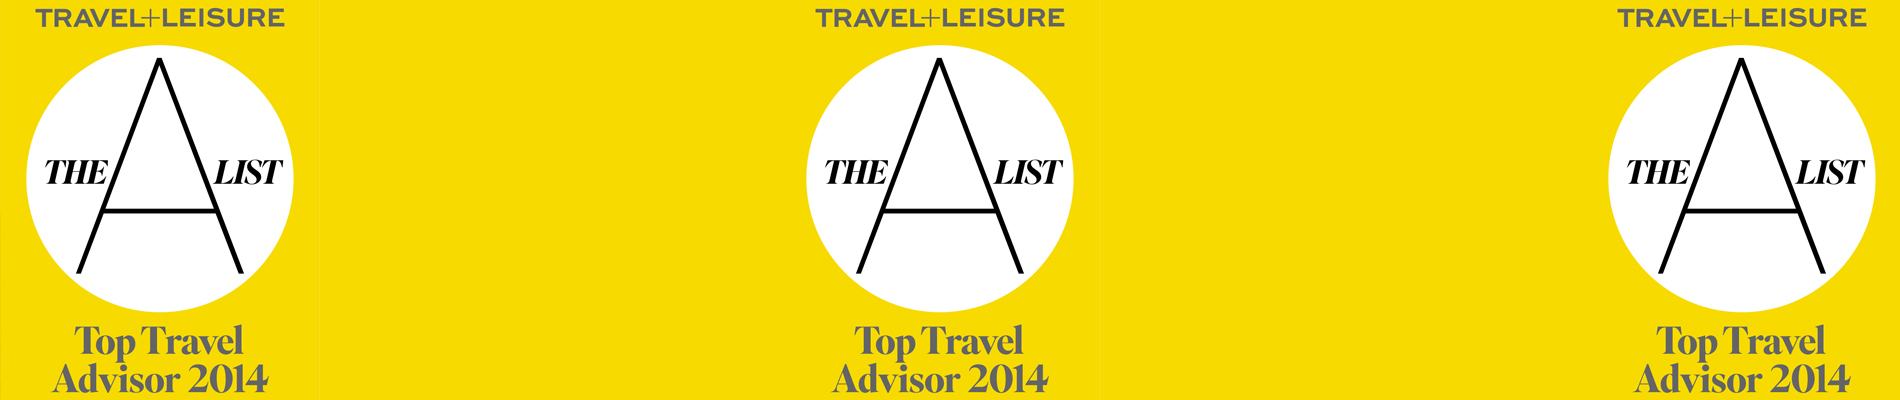 travel leisure a list header